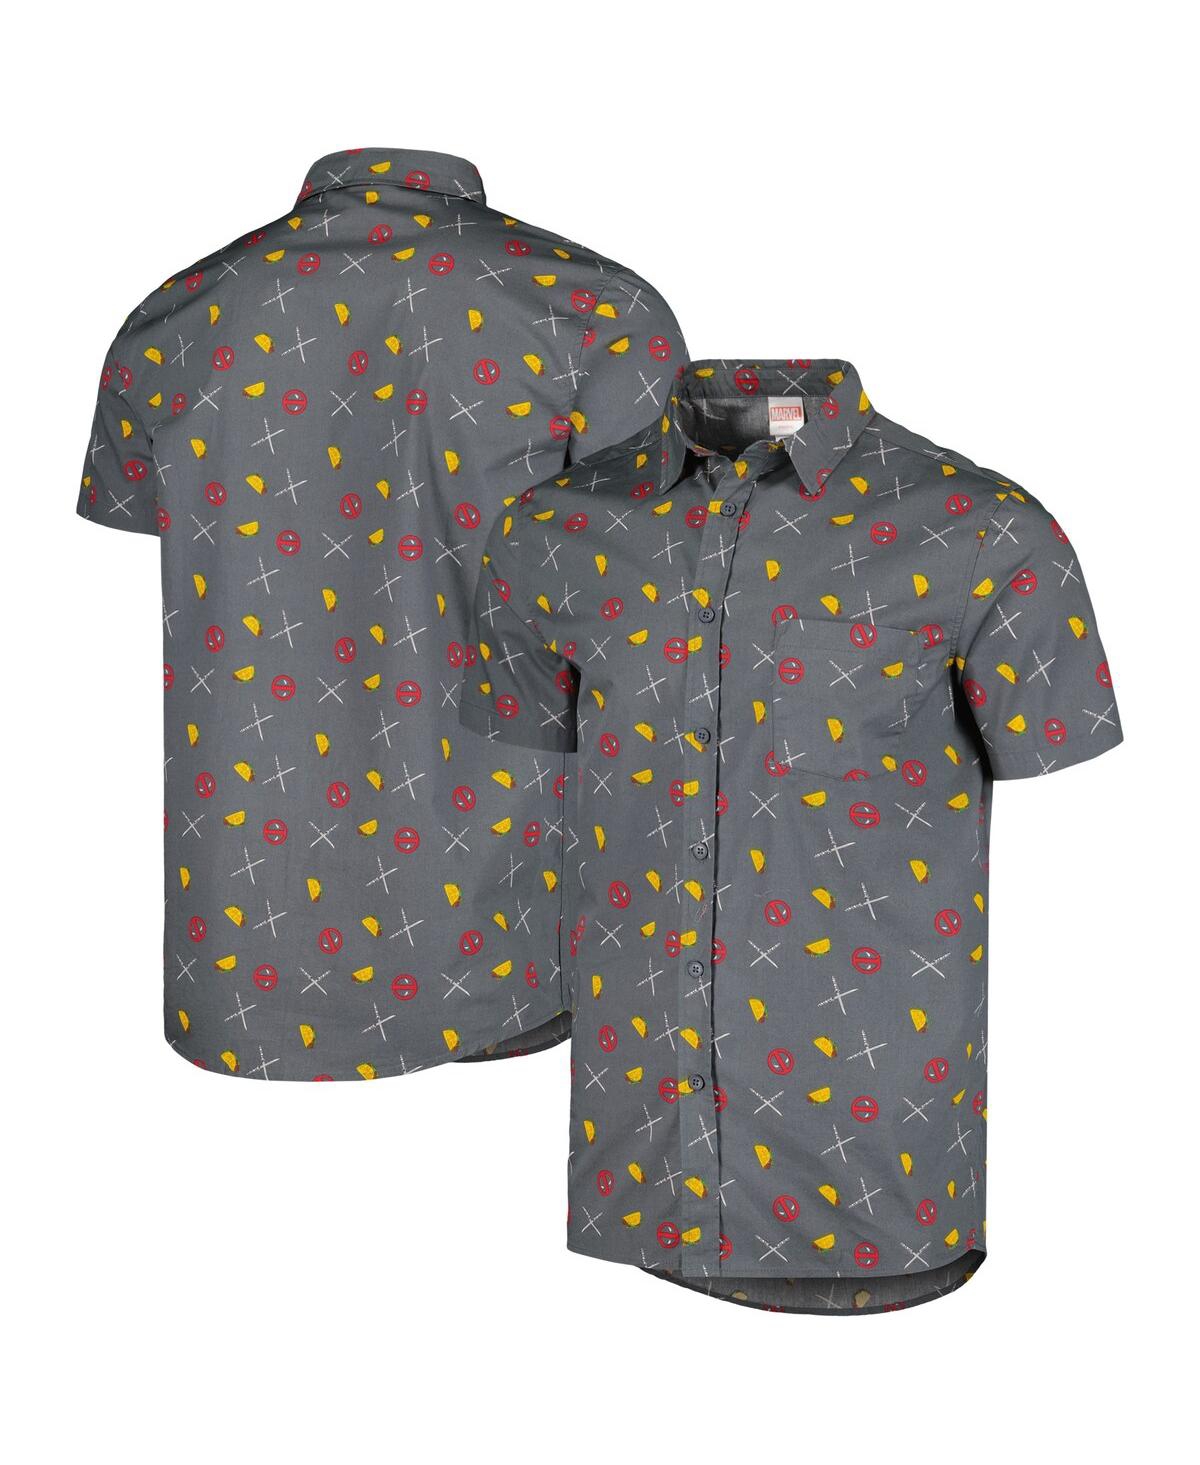 Men's Mad Engine Graphite Deadpool Party Button-Up Shirt - Graphite